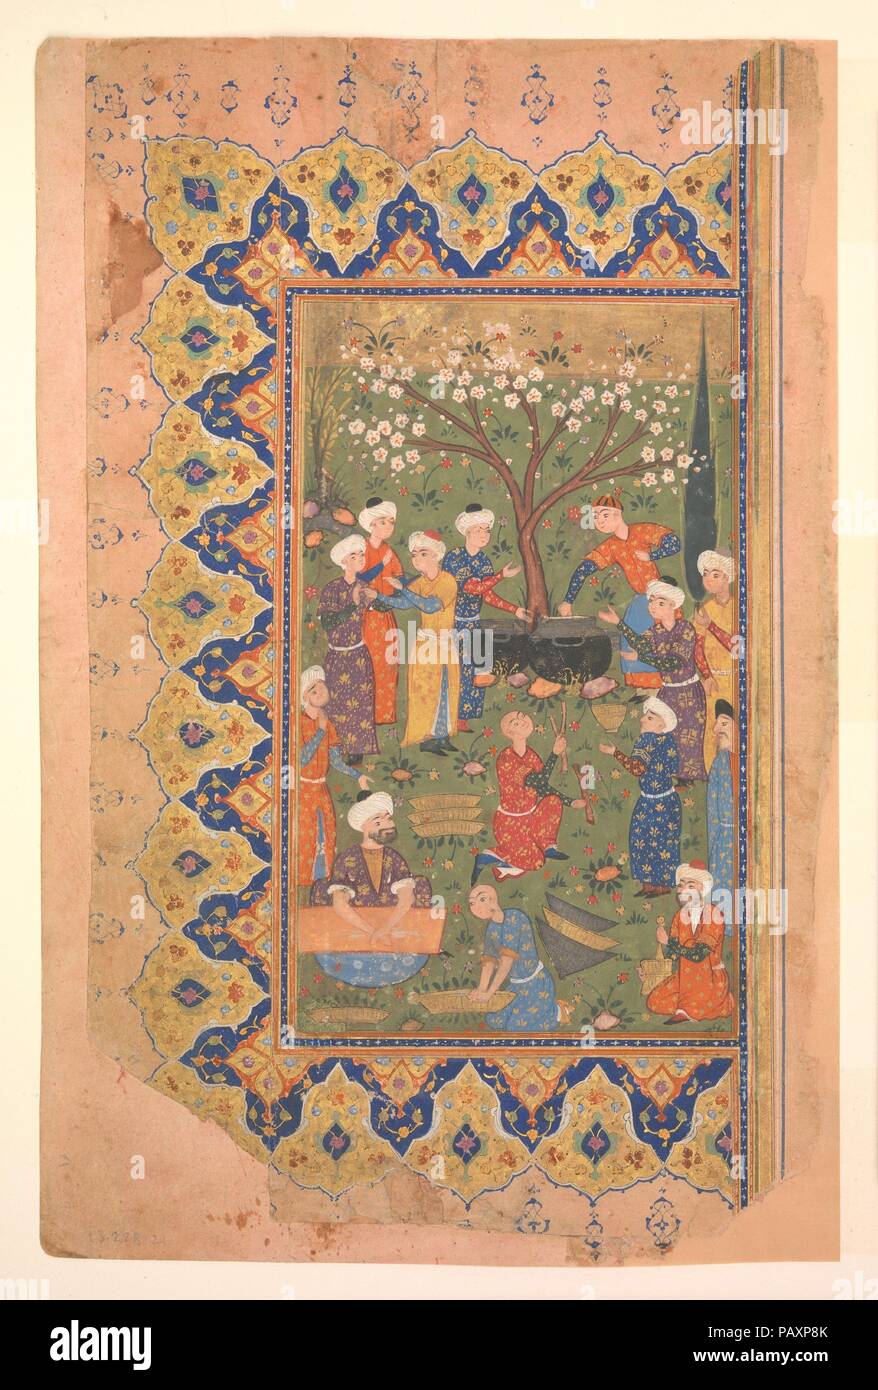 Un Noon-Day «Préparation de repas, d'un folio' Divan (Collected Works) de Mir 'Ali Shir'i Nava. Calligraphe : Qasim 'Ali de Shiraz. Dimensions : Peinture : H. 10 1/4 in. (26 cm) O. 5 7/8 in. (14,9 cm) Page : H. 10 1/2 in. (26,7 cm) O. 6 13/16 in. (17,3 cm) TMC : H. 19 1/4 in. (48,9 cm) 14 1/4 in. W. (36,2 cm). Date : 1580. Musée : Metropolitan Museum of Art, New York, USA. Banque D'Images